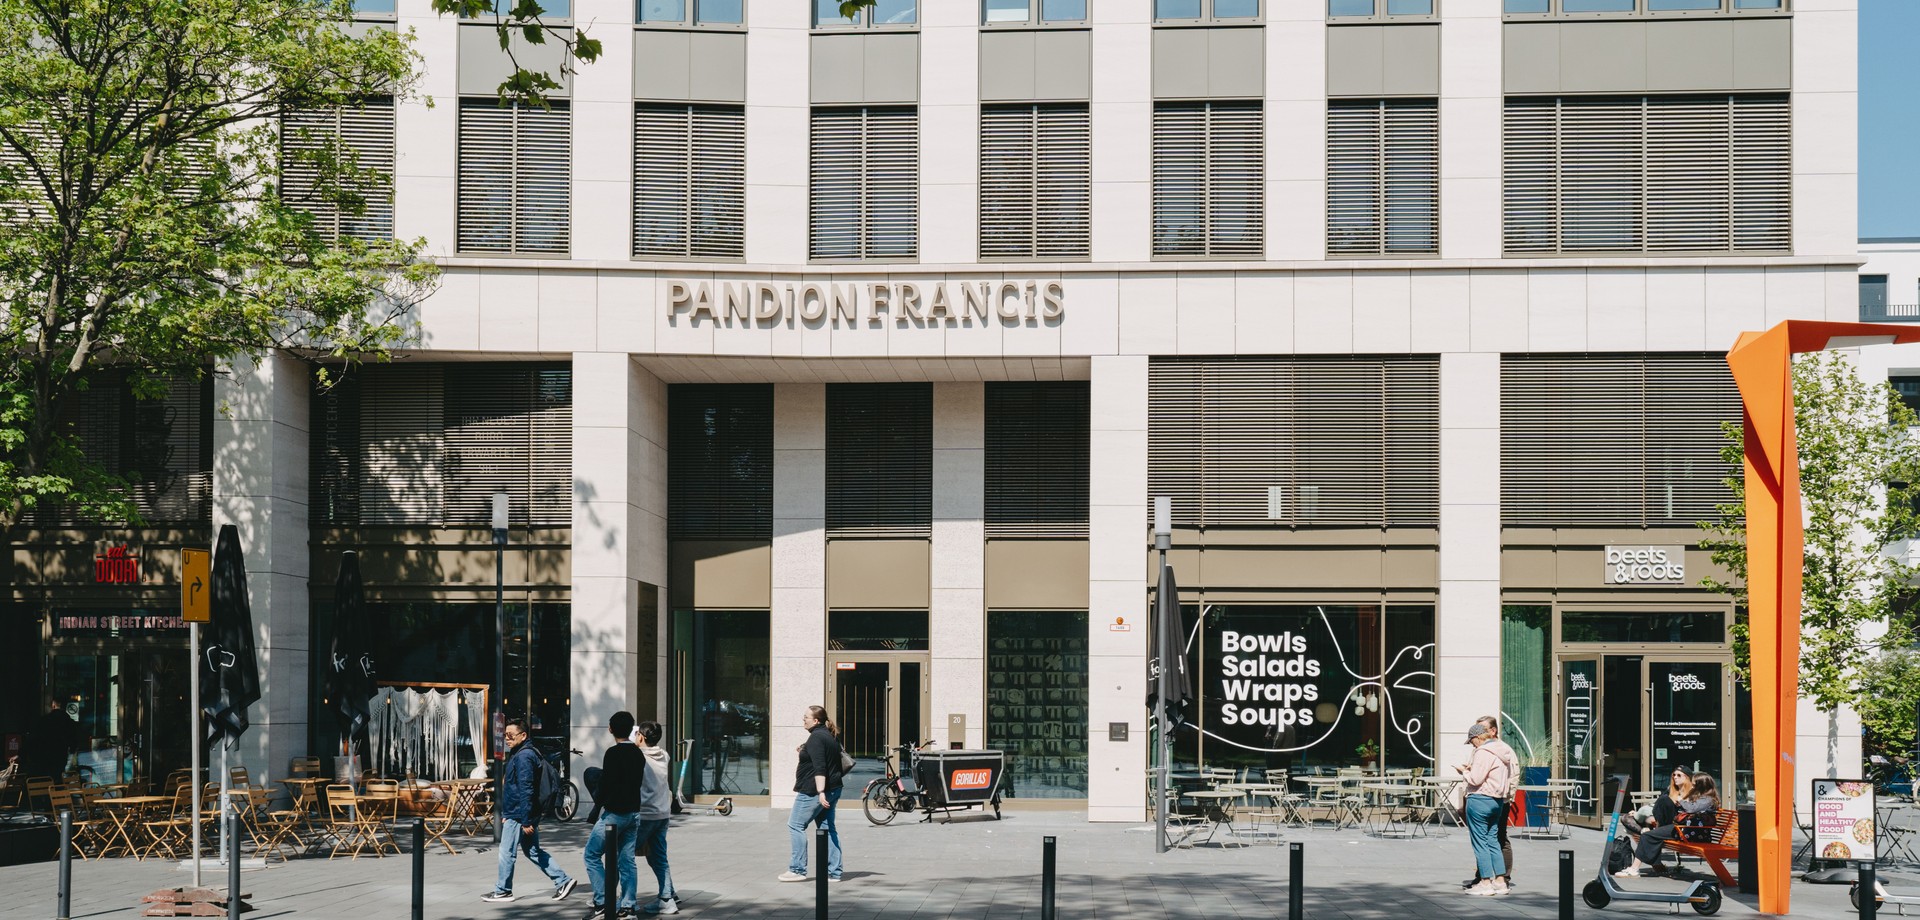 Pandion-Francis_Vorplatz3.jpg
				